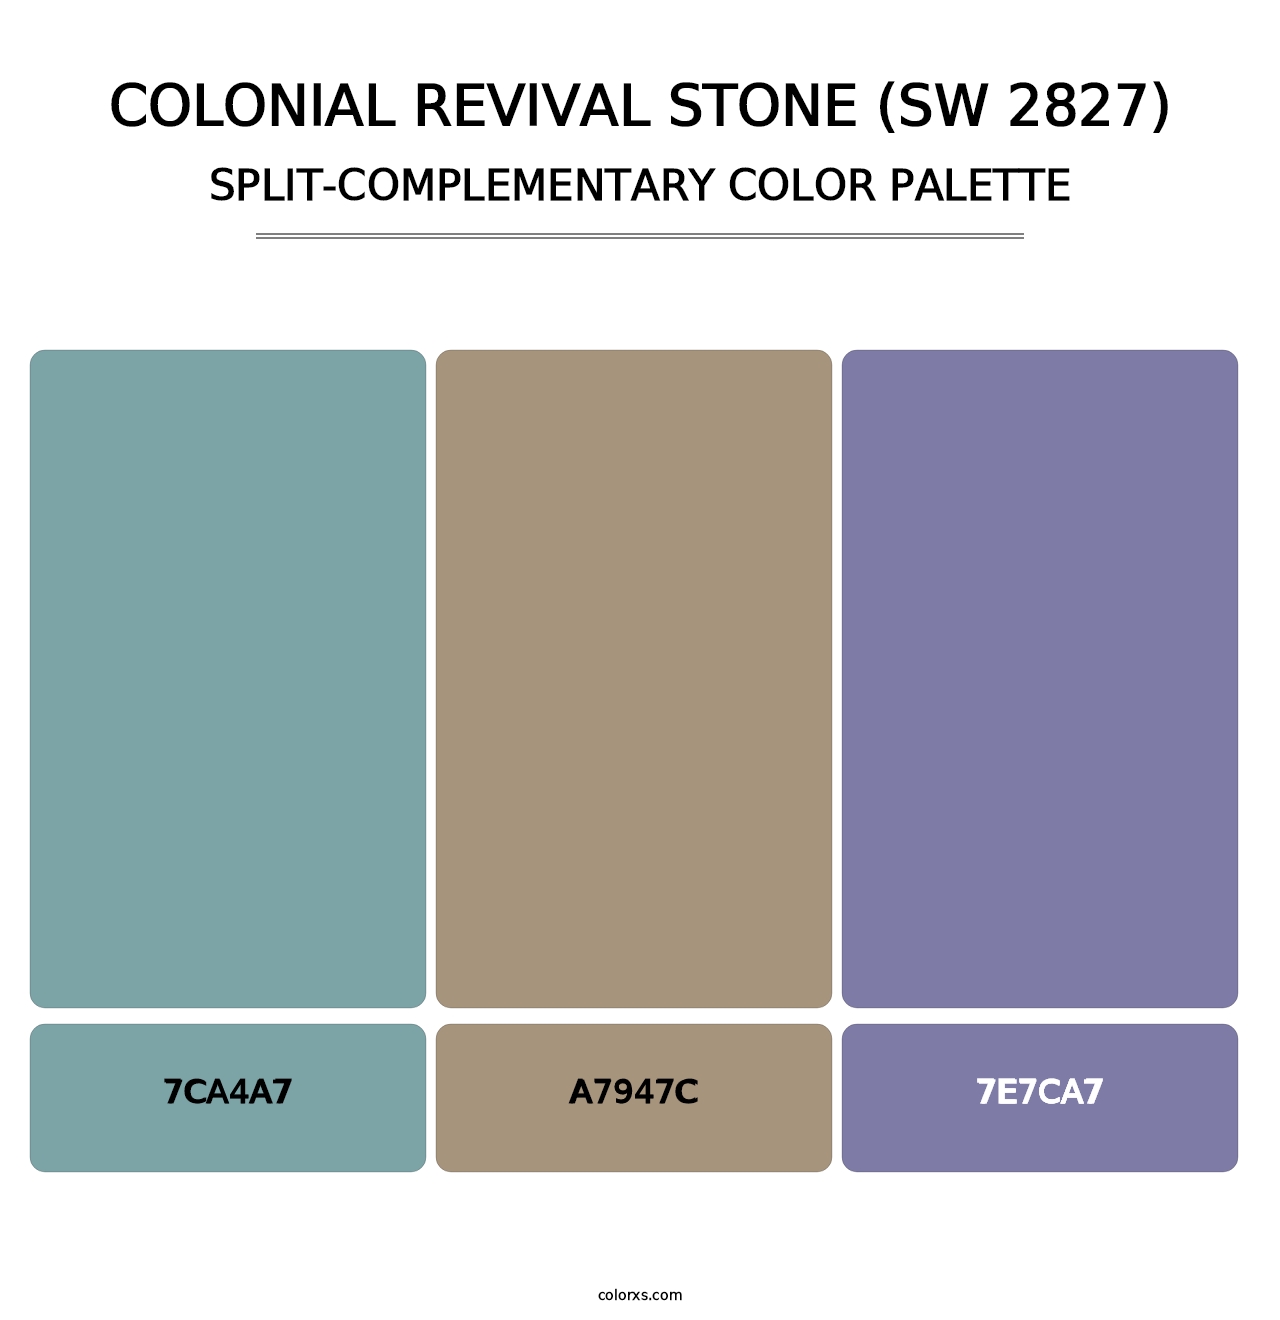 Colonial Revival Stone (SW 2827) - Split-Complementary Color Palette